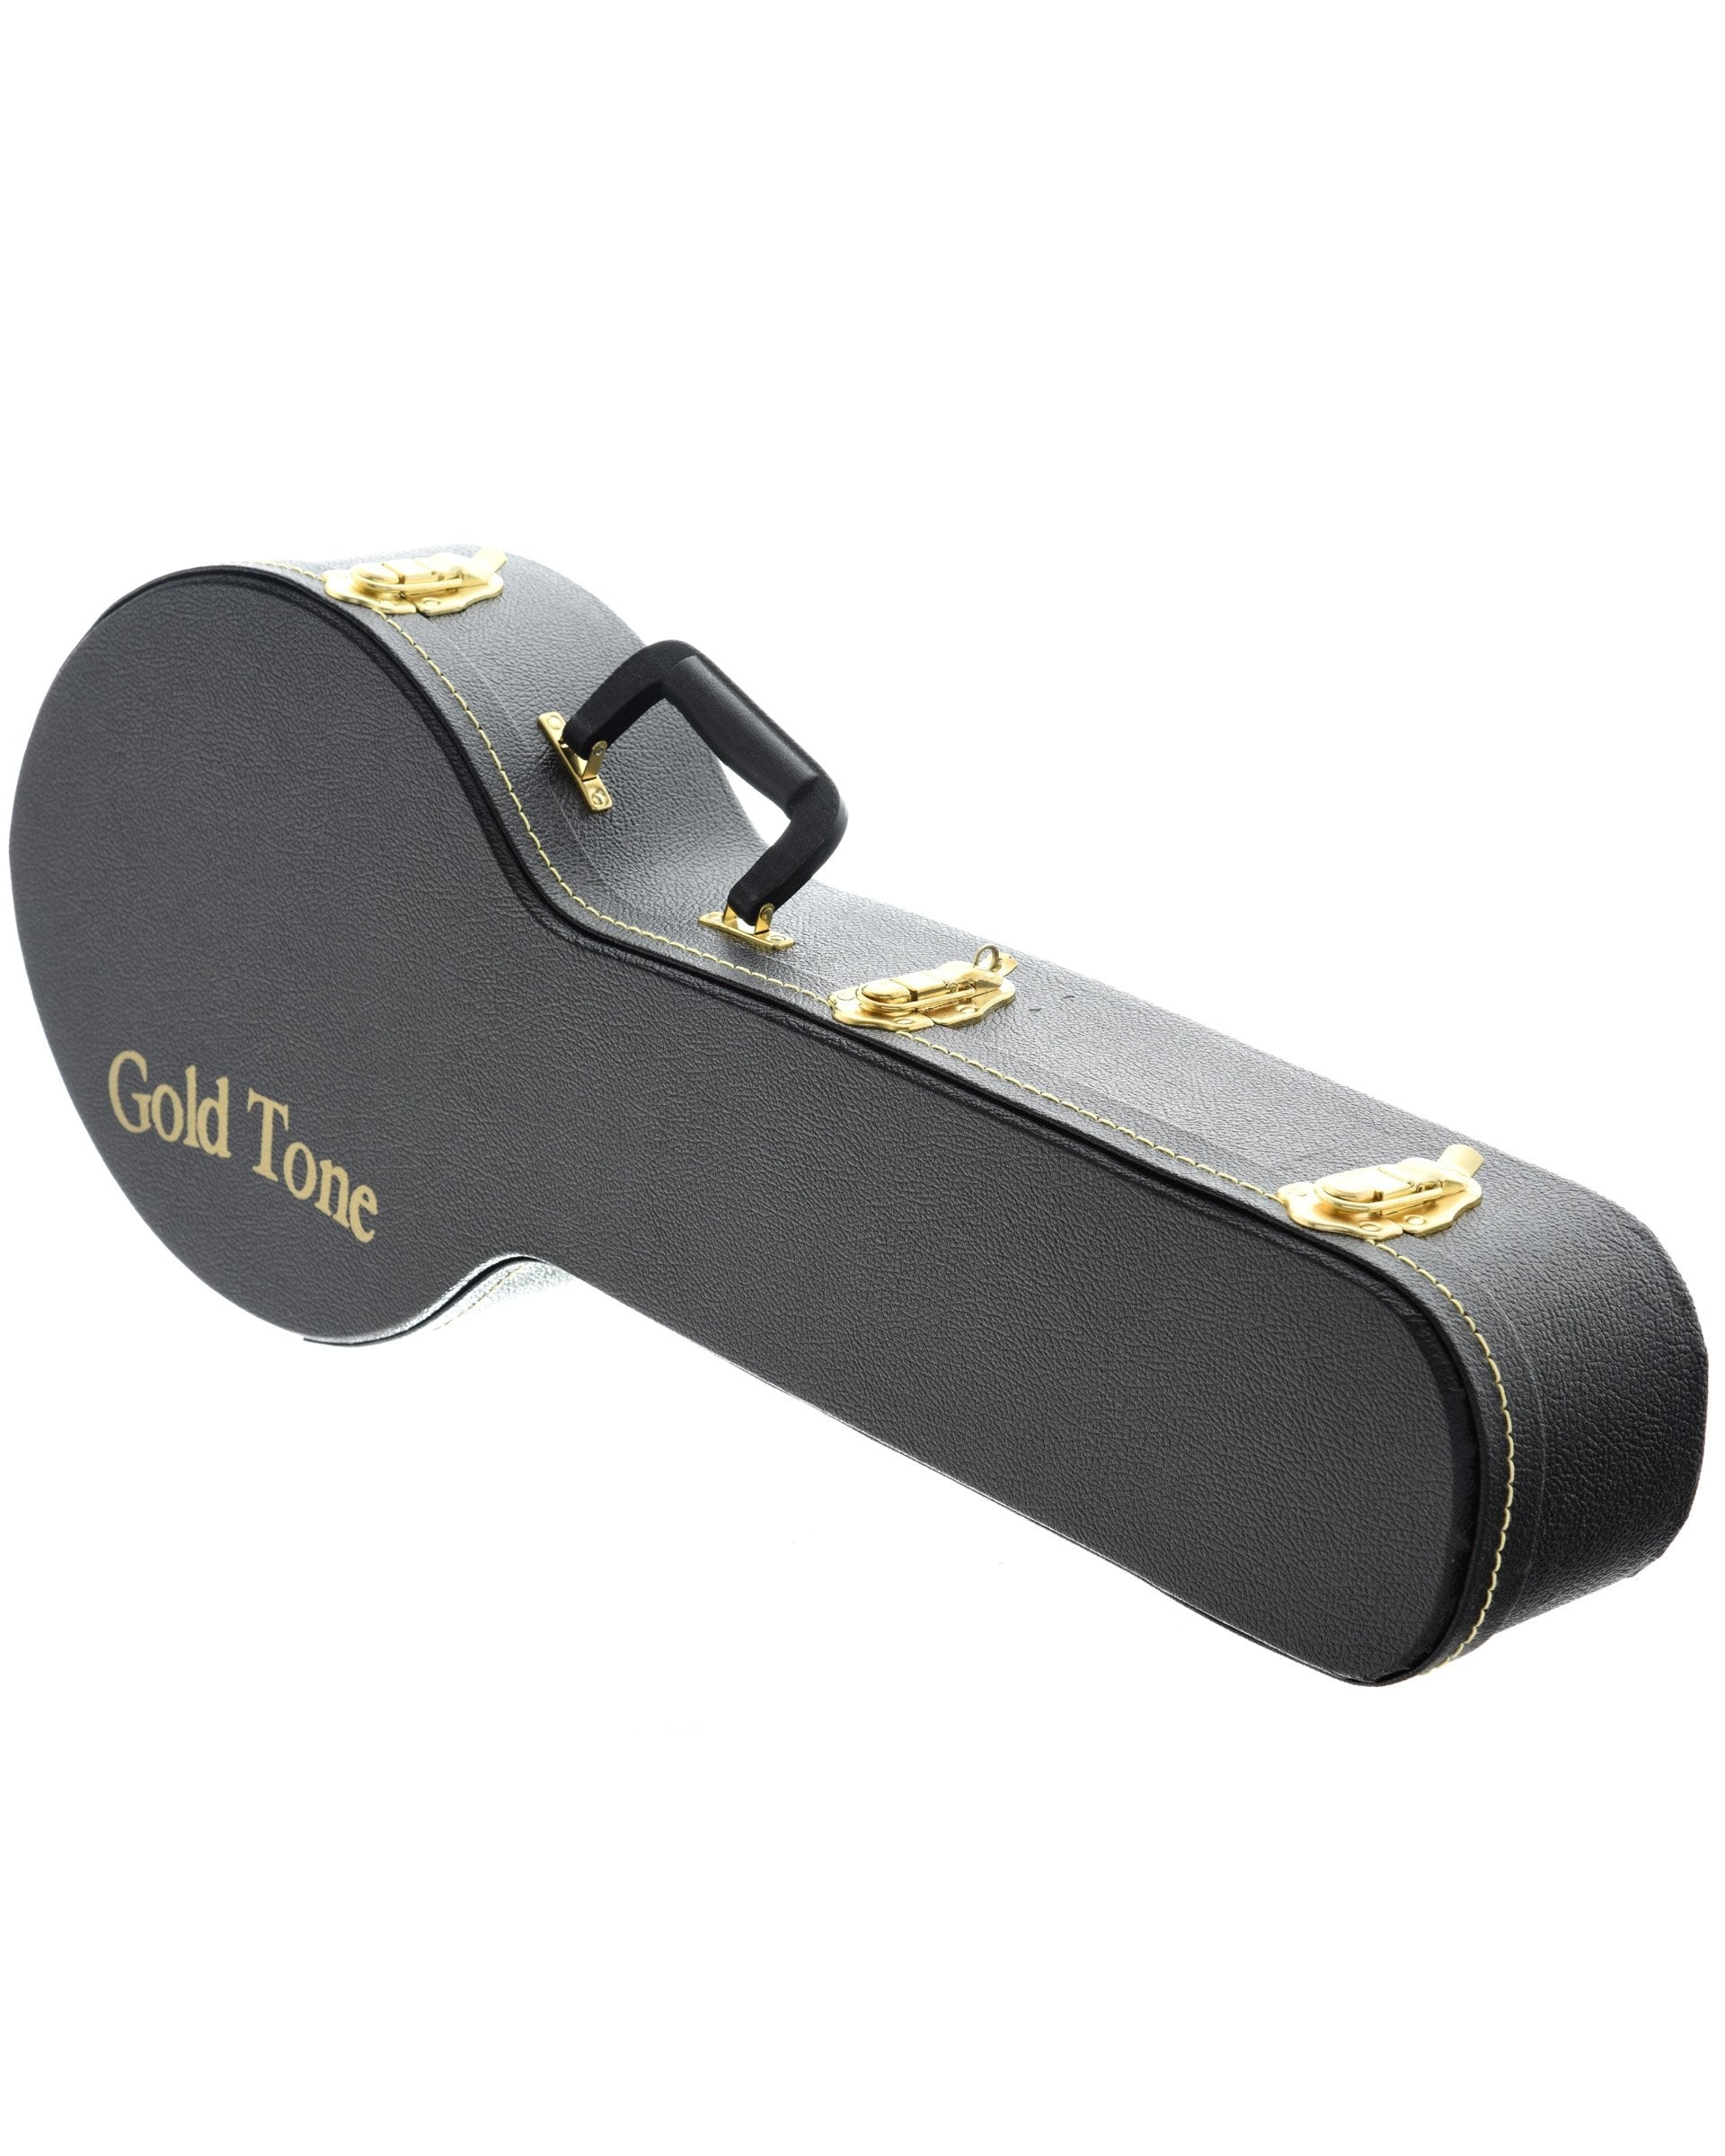 Image 1 of Gold Tone BG-Mini Hardshell Case - SKU# BCGT-BGM : Product Type Accessories & Parts : Elderly Instruments